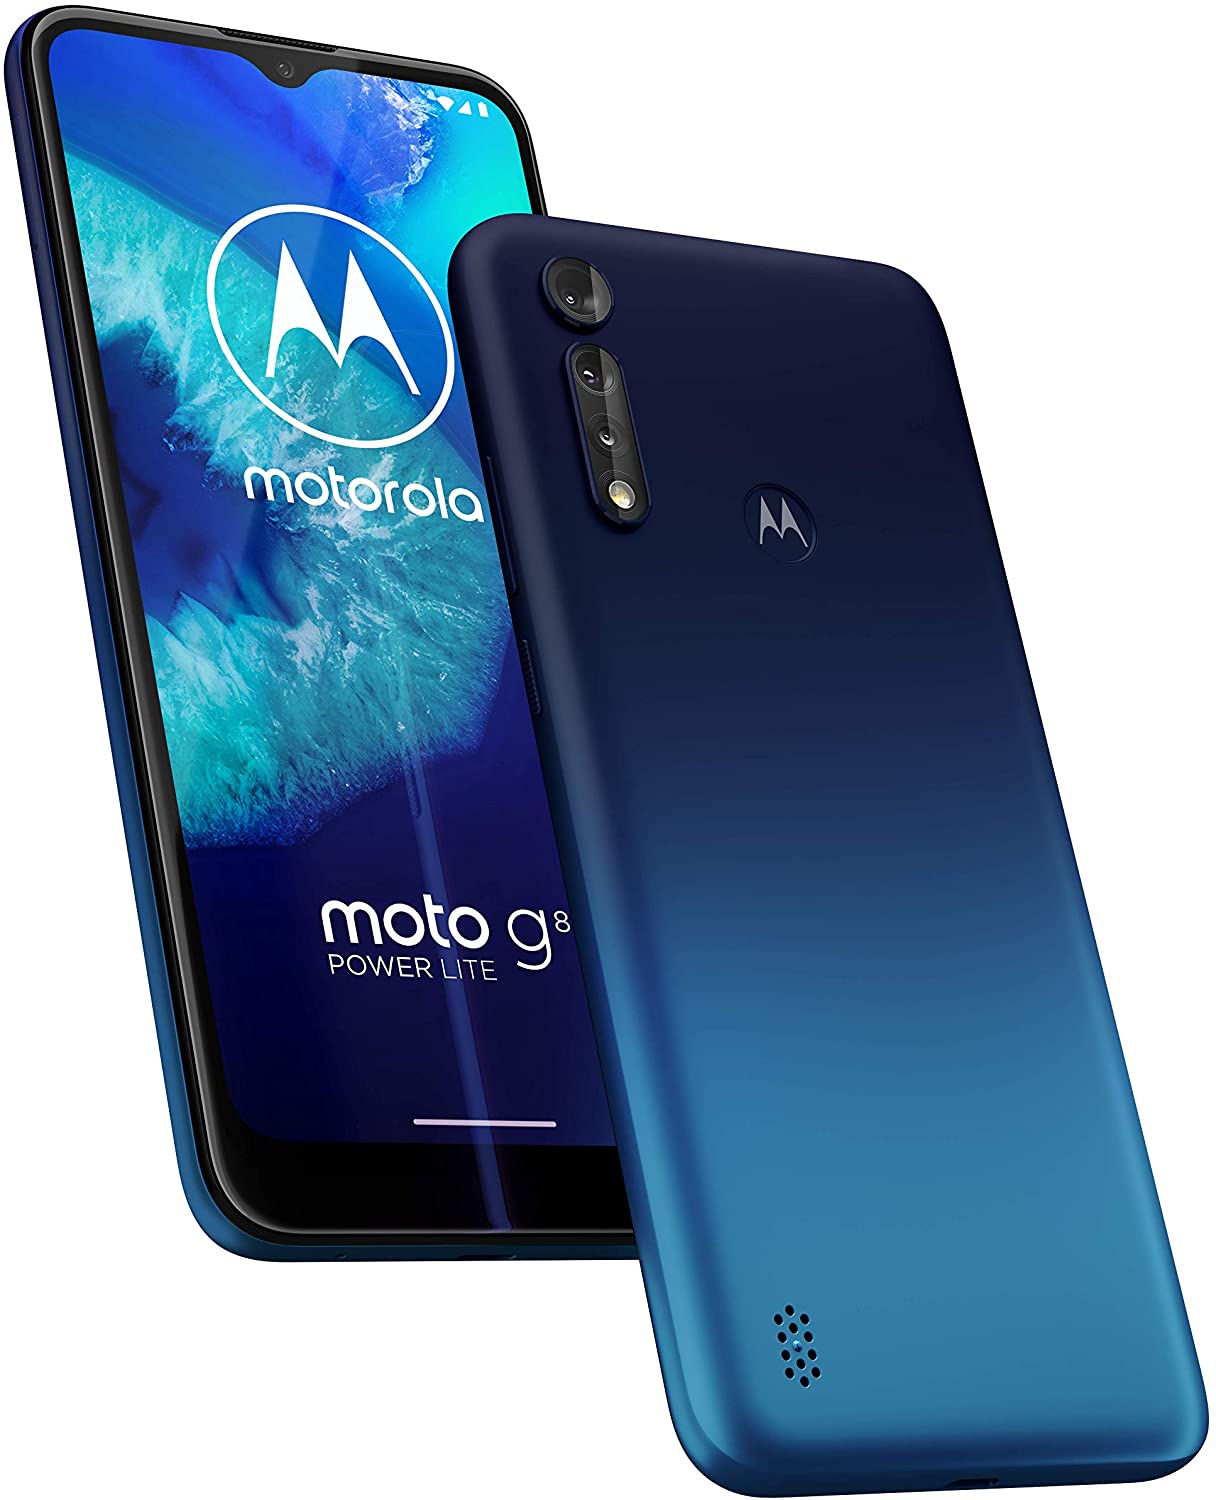 Motorola Moto G8 Power Lite 6 5インチipsディスプレイ Helio P35チップ トリプルカメラ 5000 Mahバッテリー Geek Tech Online